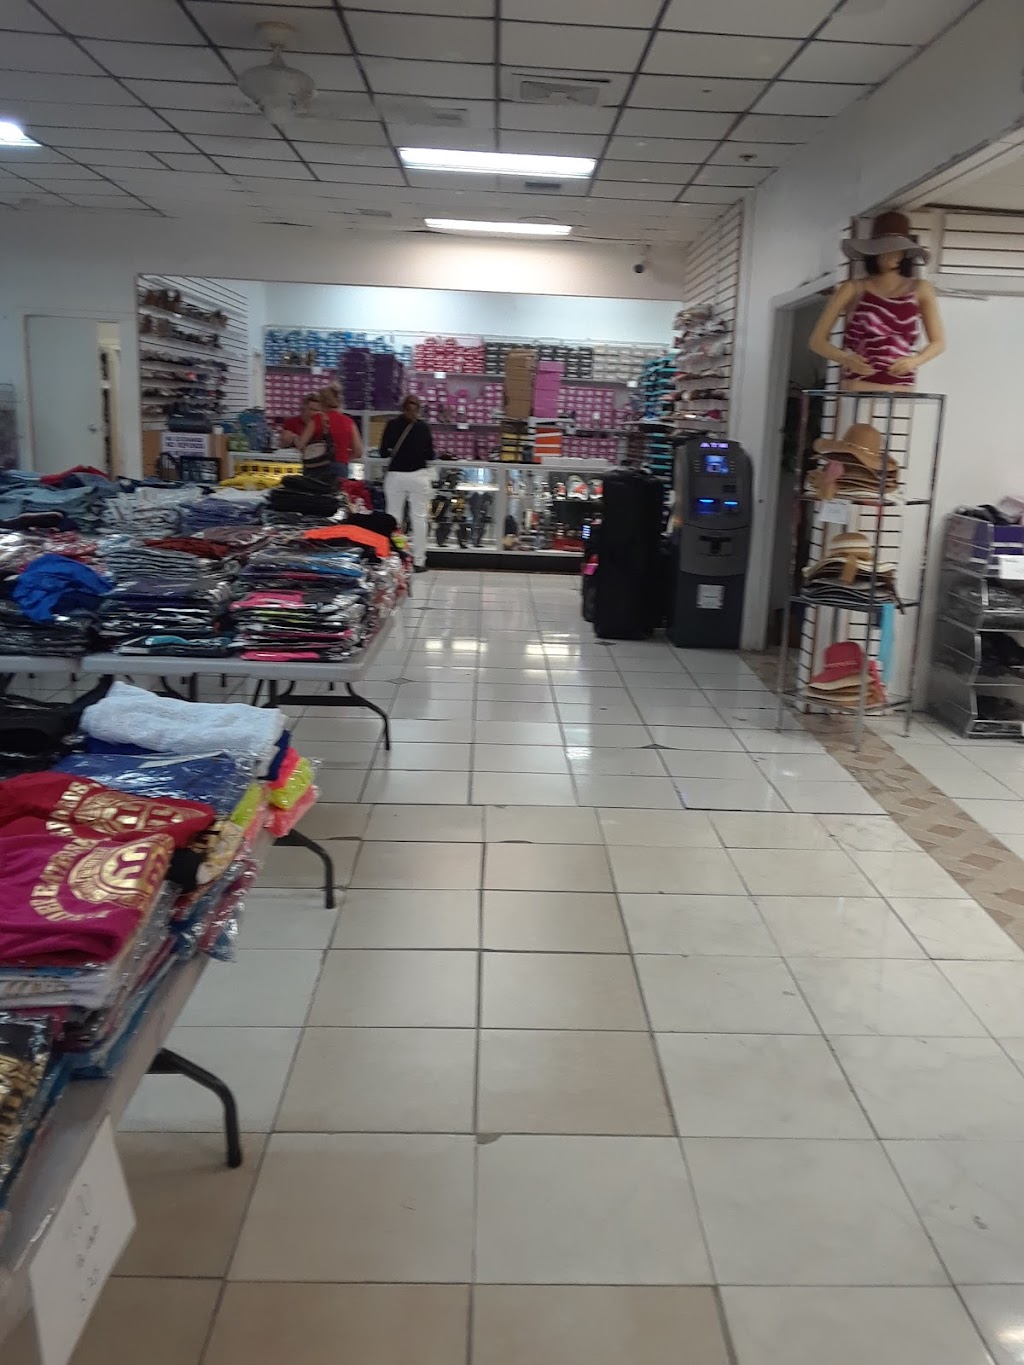 Ana Fashion Store | 6895 W 4th Ave, Hialeah, FL 33014, USA | Phone: (786) 817-2446